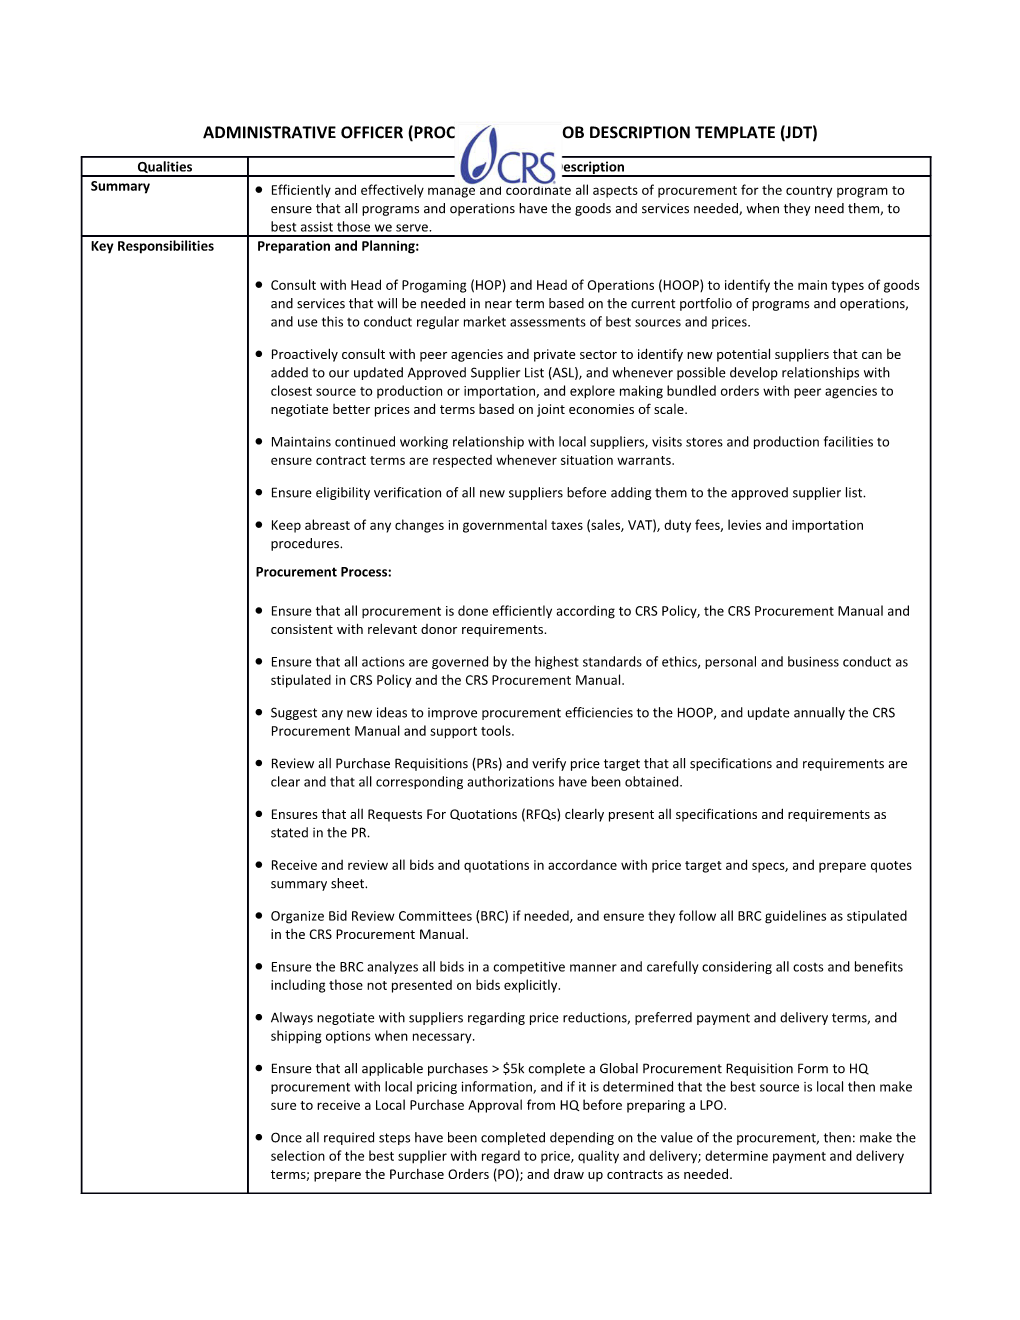 Administrative Officer (Procurement) Job Description Template (Jdt)